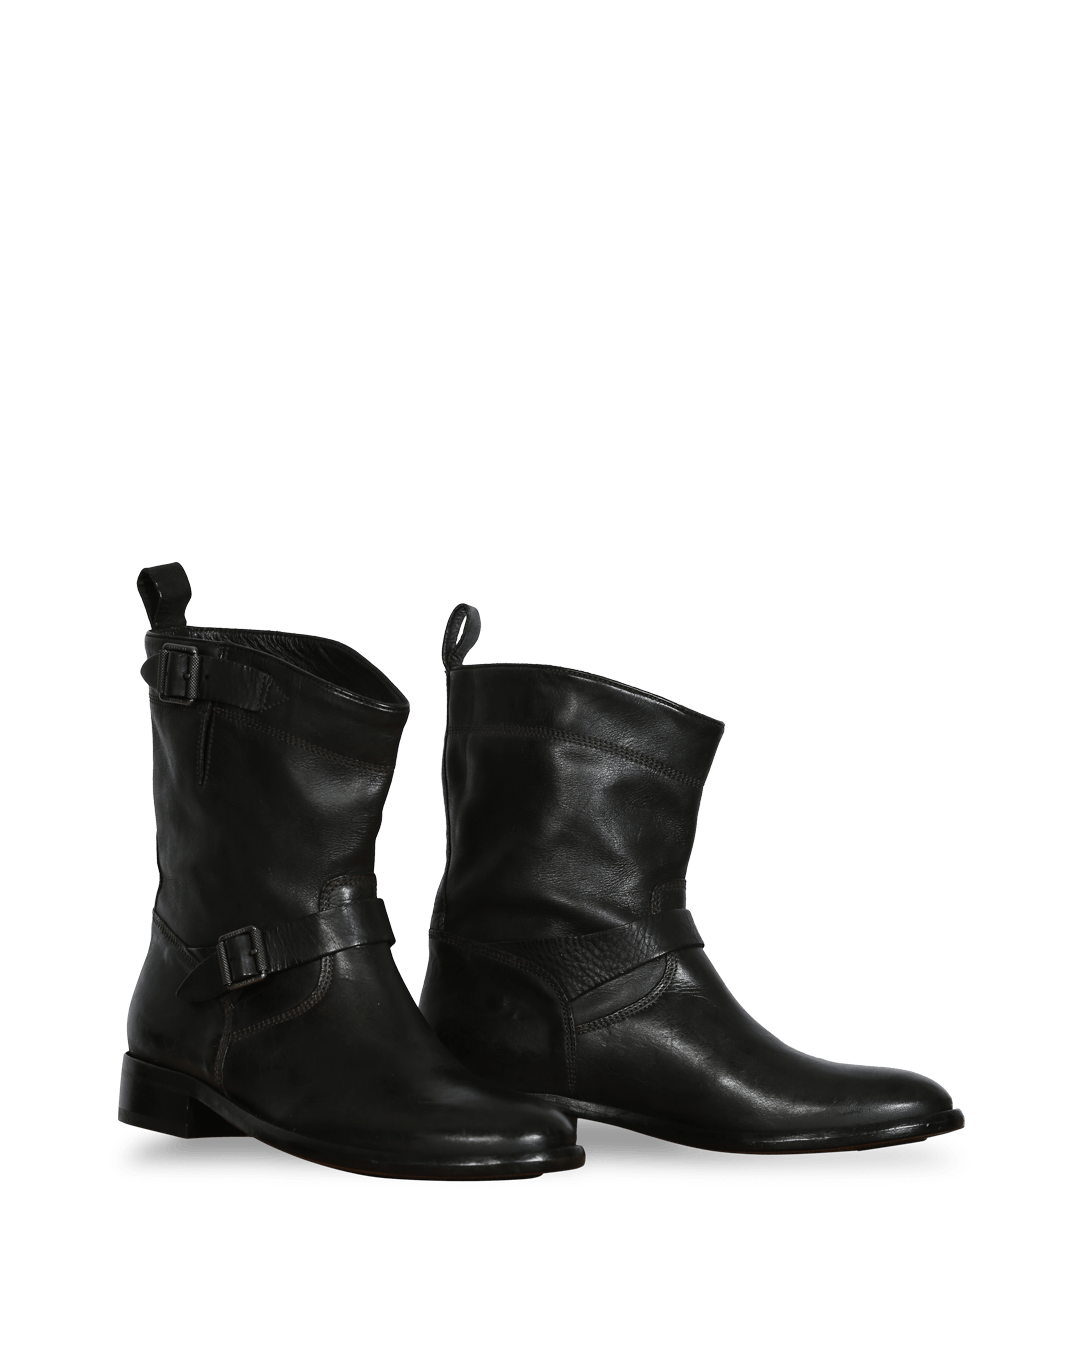 Belstaff Bedford Ladies' Boot, black | Gotlands Online Shop | gotlands.de